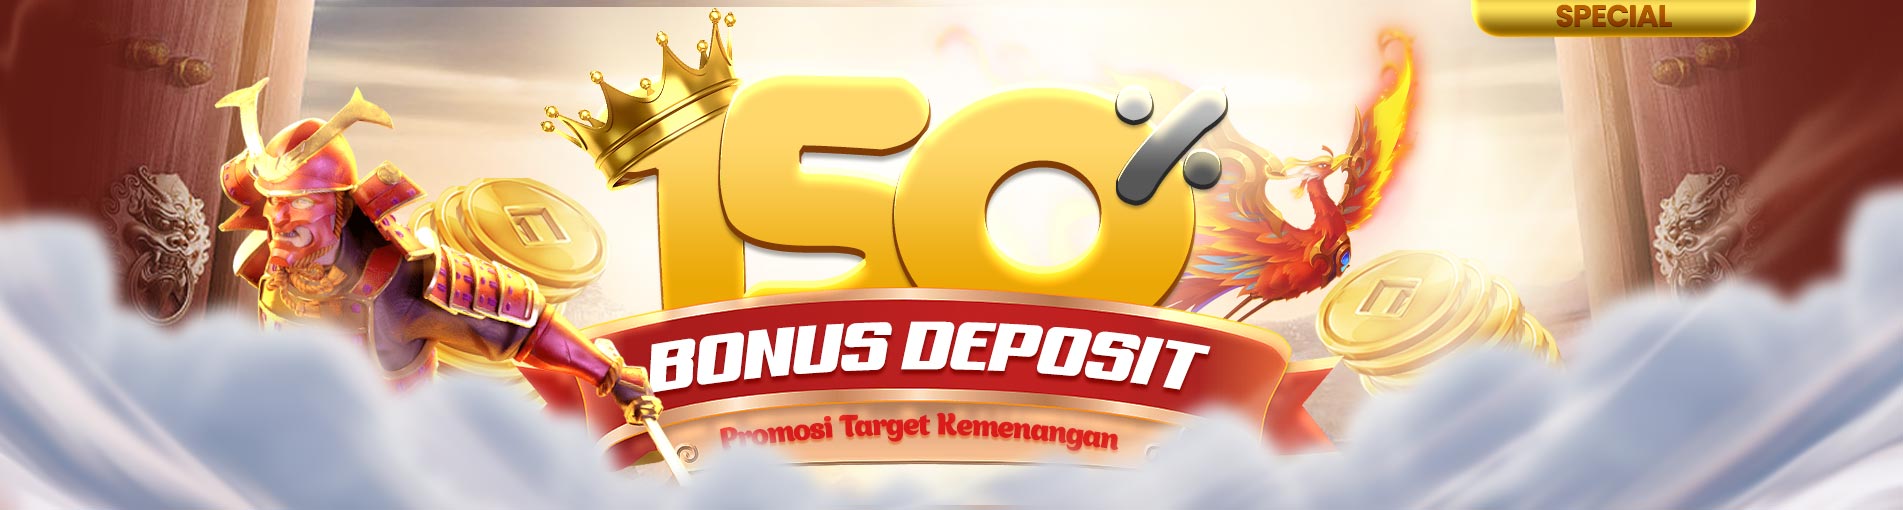 Bonus Deposit 150% - Promosi Target Kemenangan